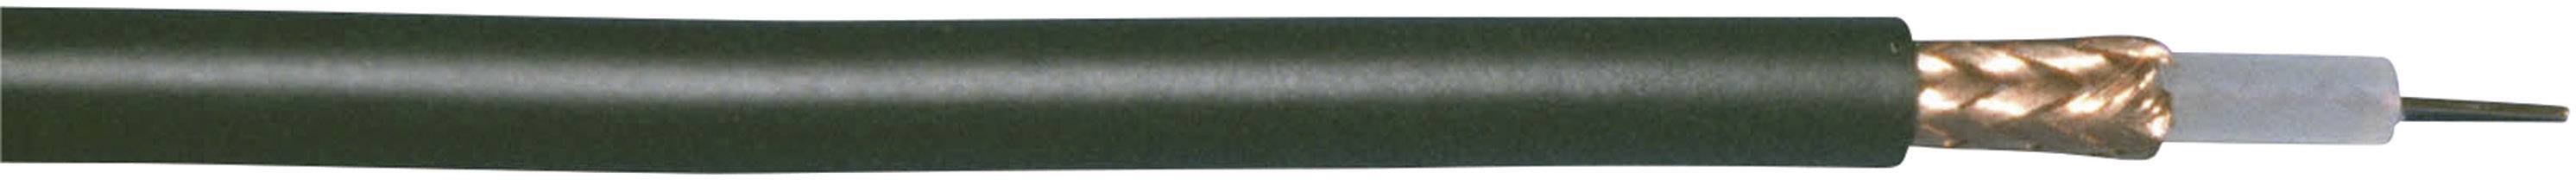 BEDEA Koaxialkabel Außen-Durchmesser: 10.30 mm RG213 50 ¿ 60 dB Schwarz Bedea 10970941 Meterware